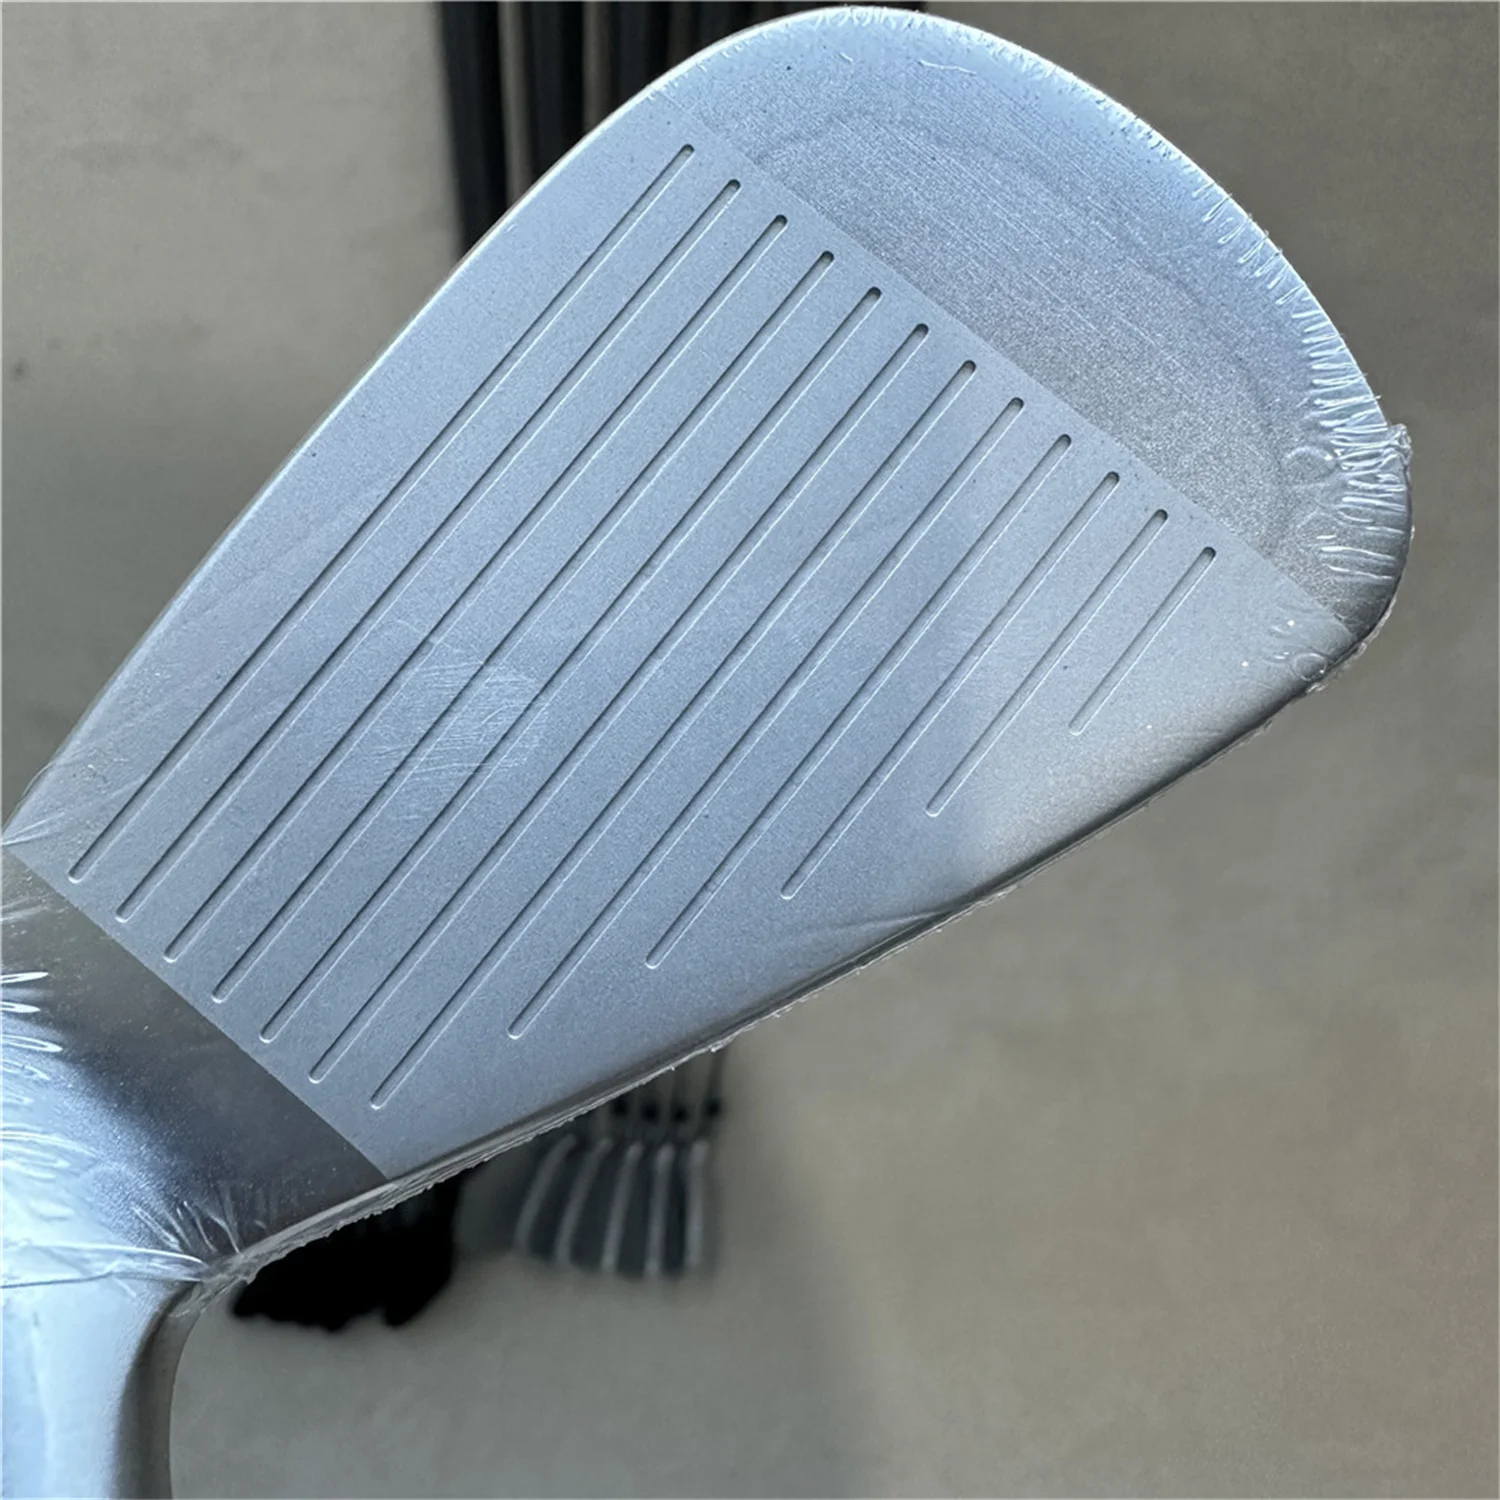 

Men Brand Golf irons Golf club iron Set 4-9 P (7pcs) With Steel/Graphite Shaft Head Cover